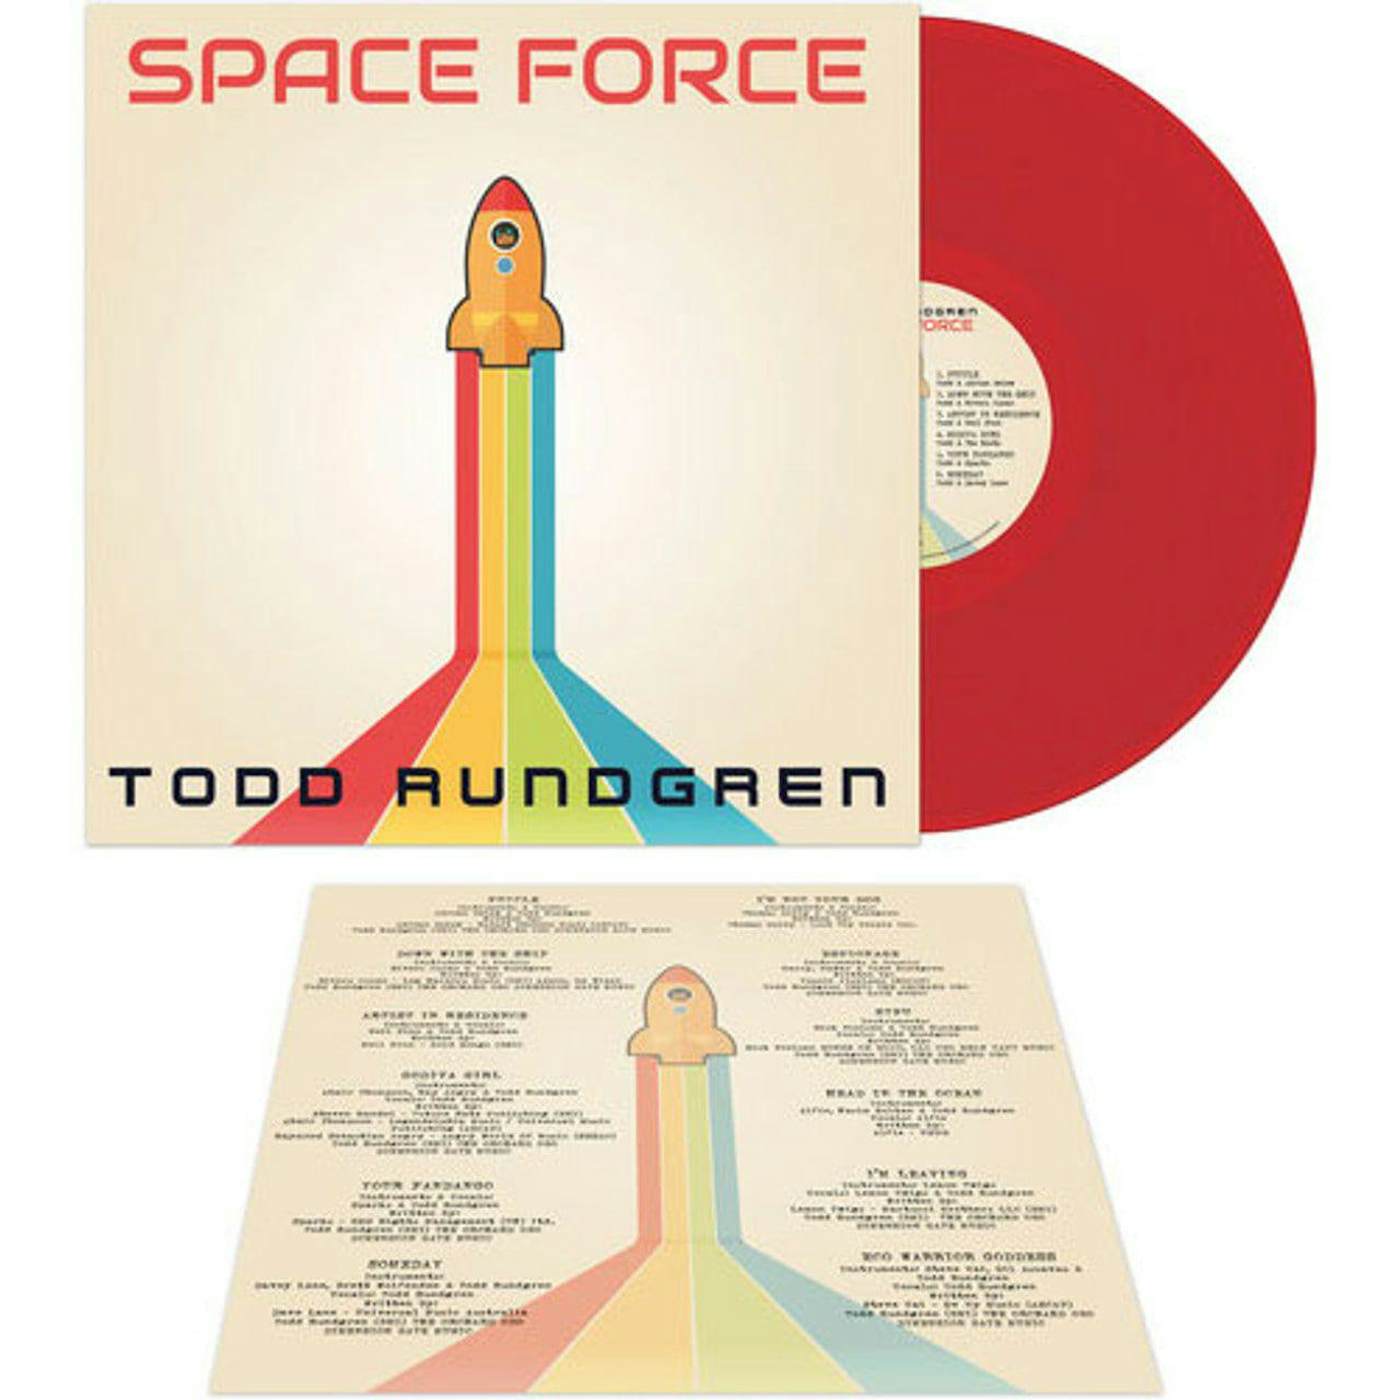 Todd Rundgren Space Force (Red) Vinyl Record